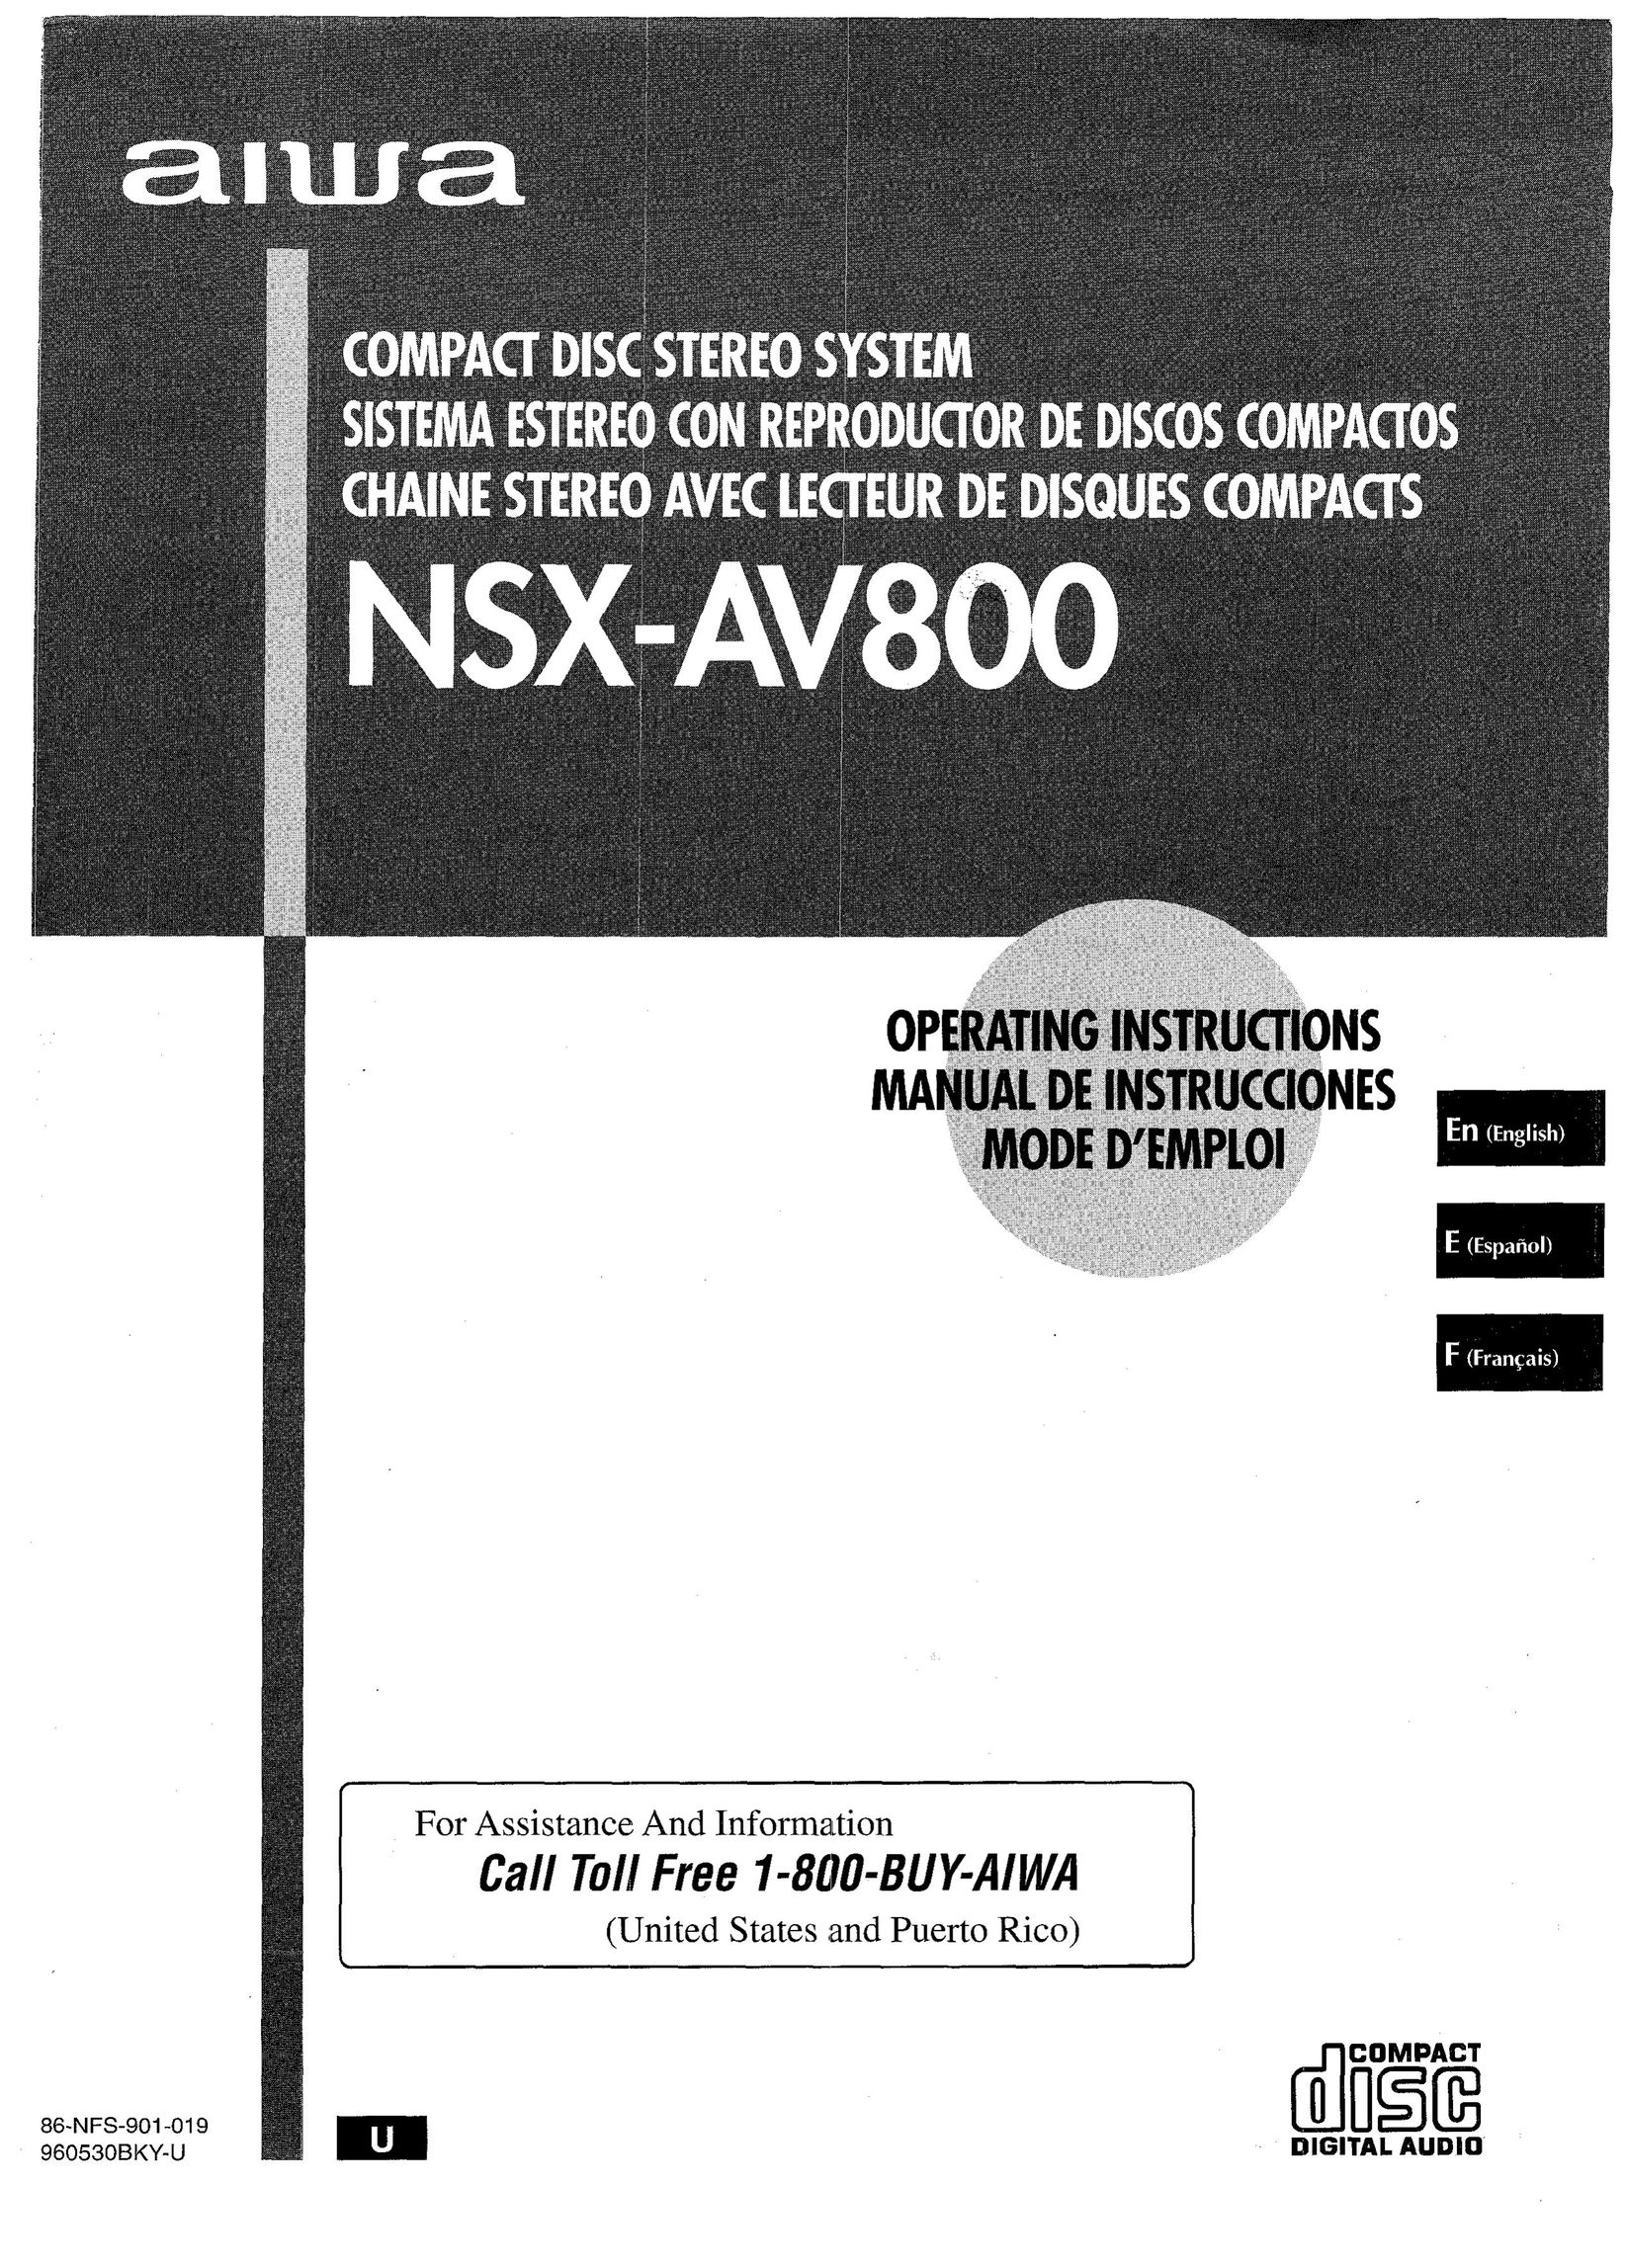 Aiwa NSX-AV800 CD Player User Manual